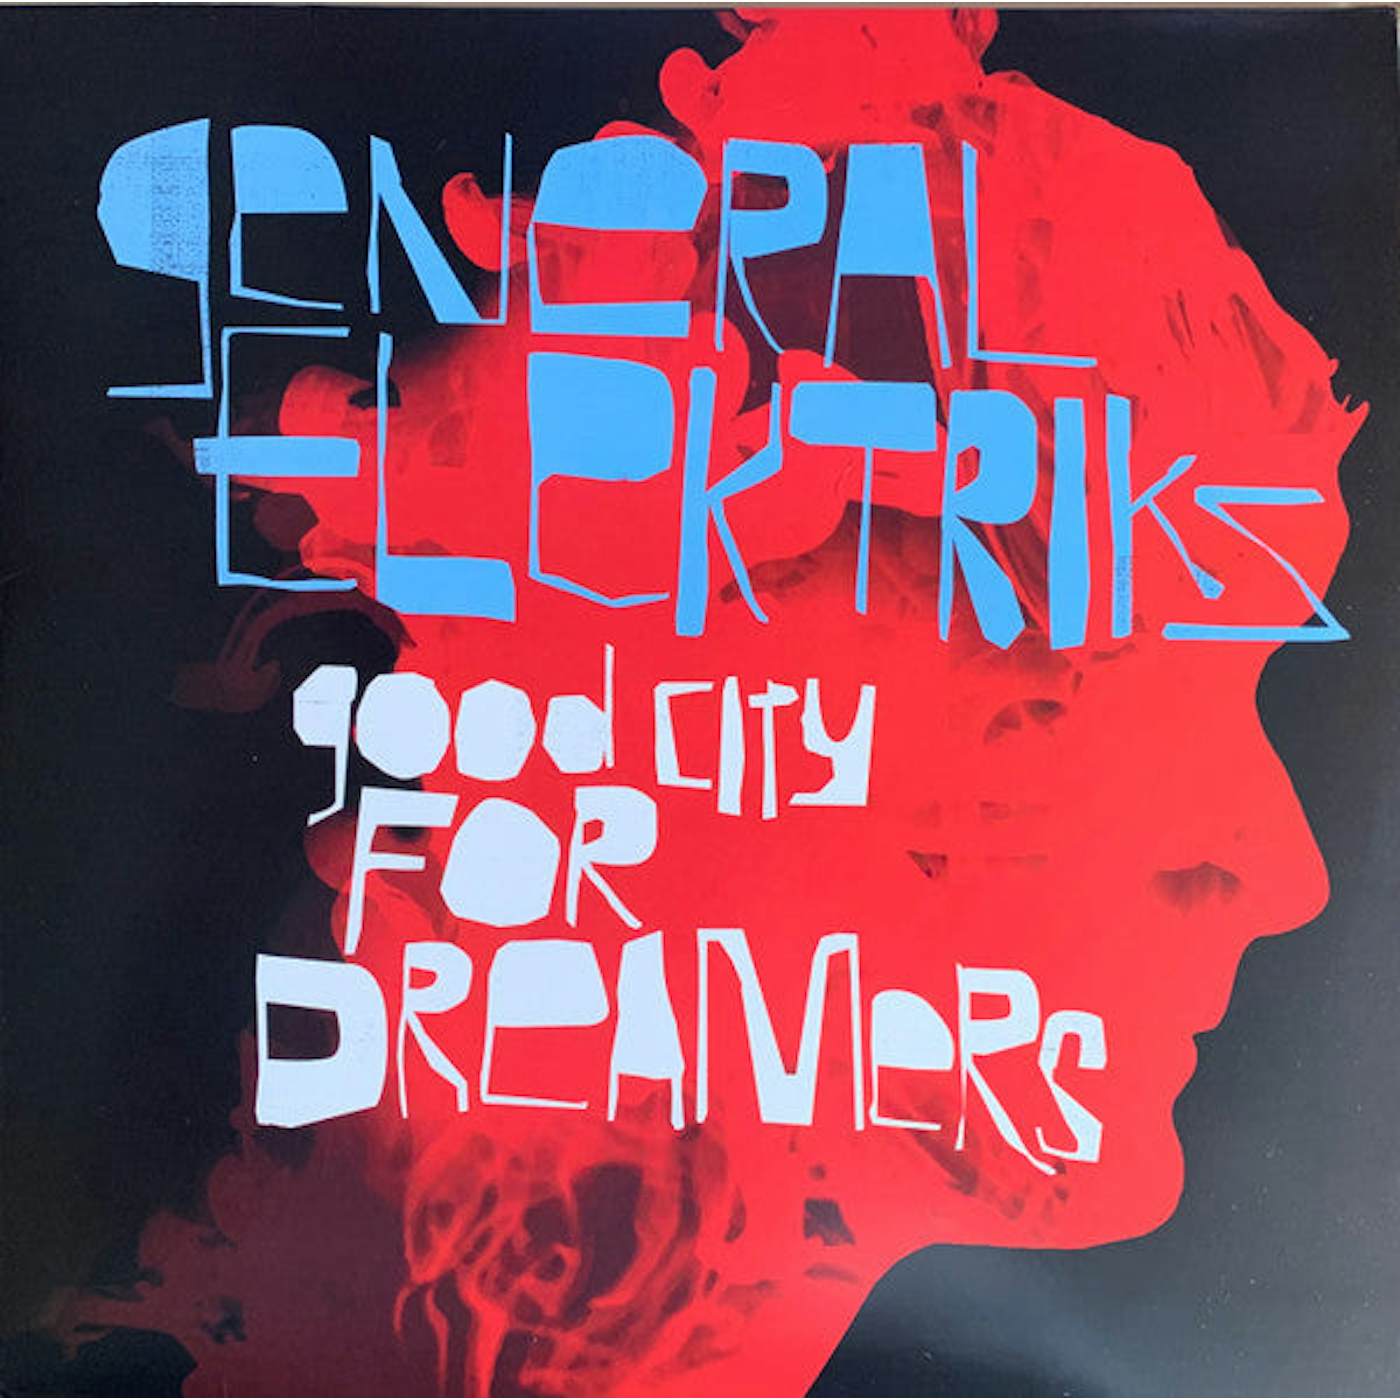 General Elektriks / Good City For Dreamers - 2LP